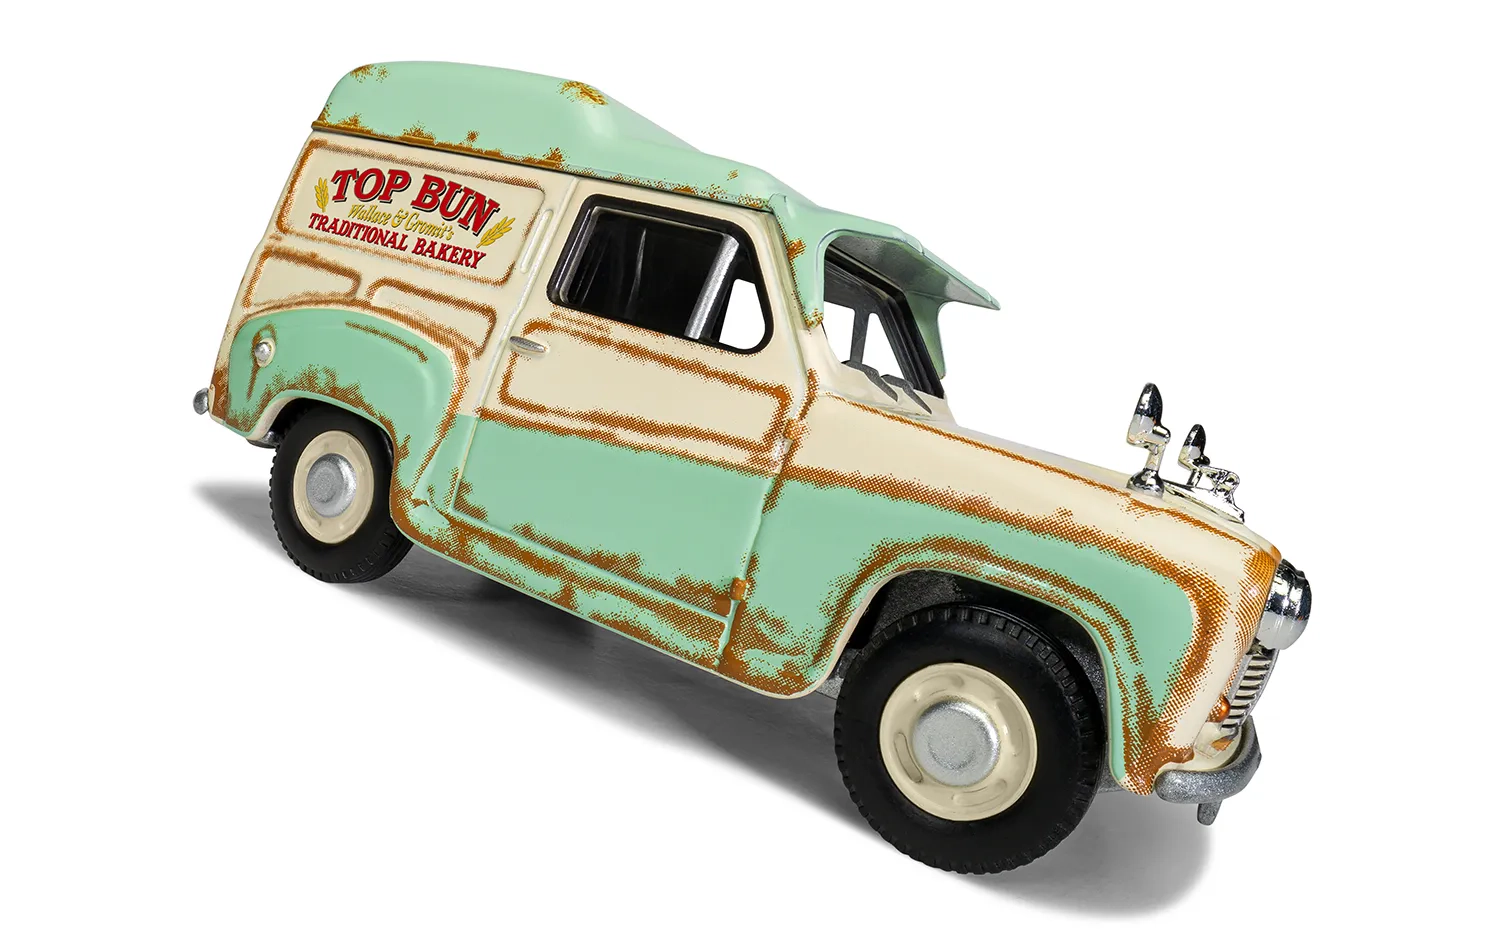 Wallace & Gromit Austin A35 Van Collection - Cheese Please!, Top Bun, Spick & Spanmobile